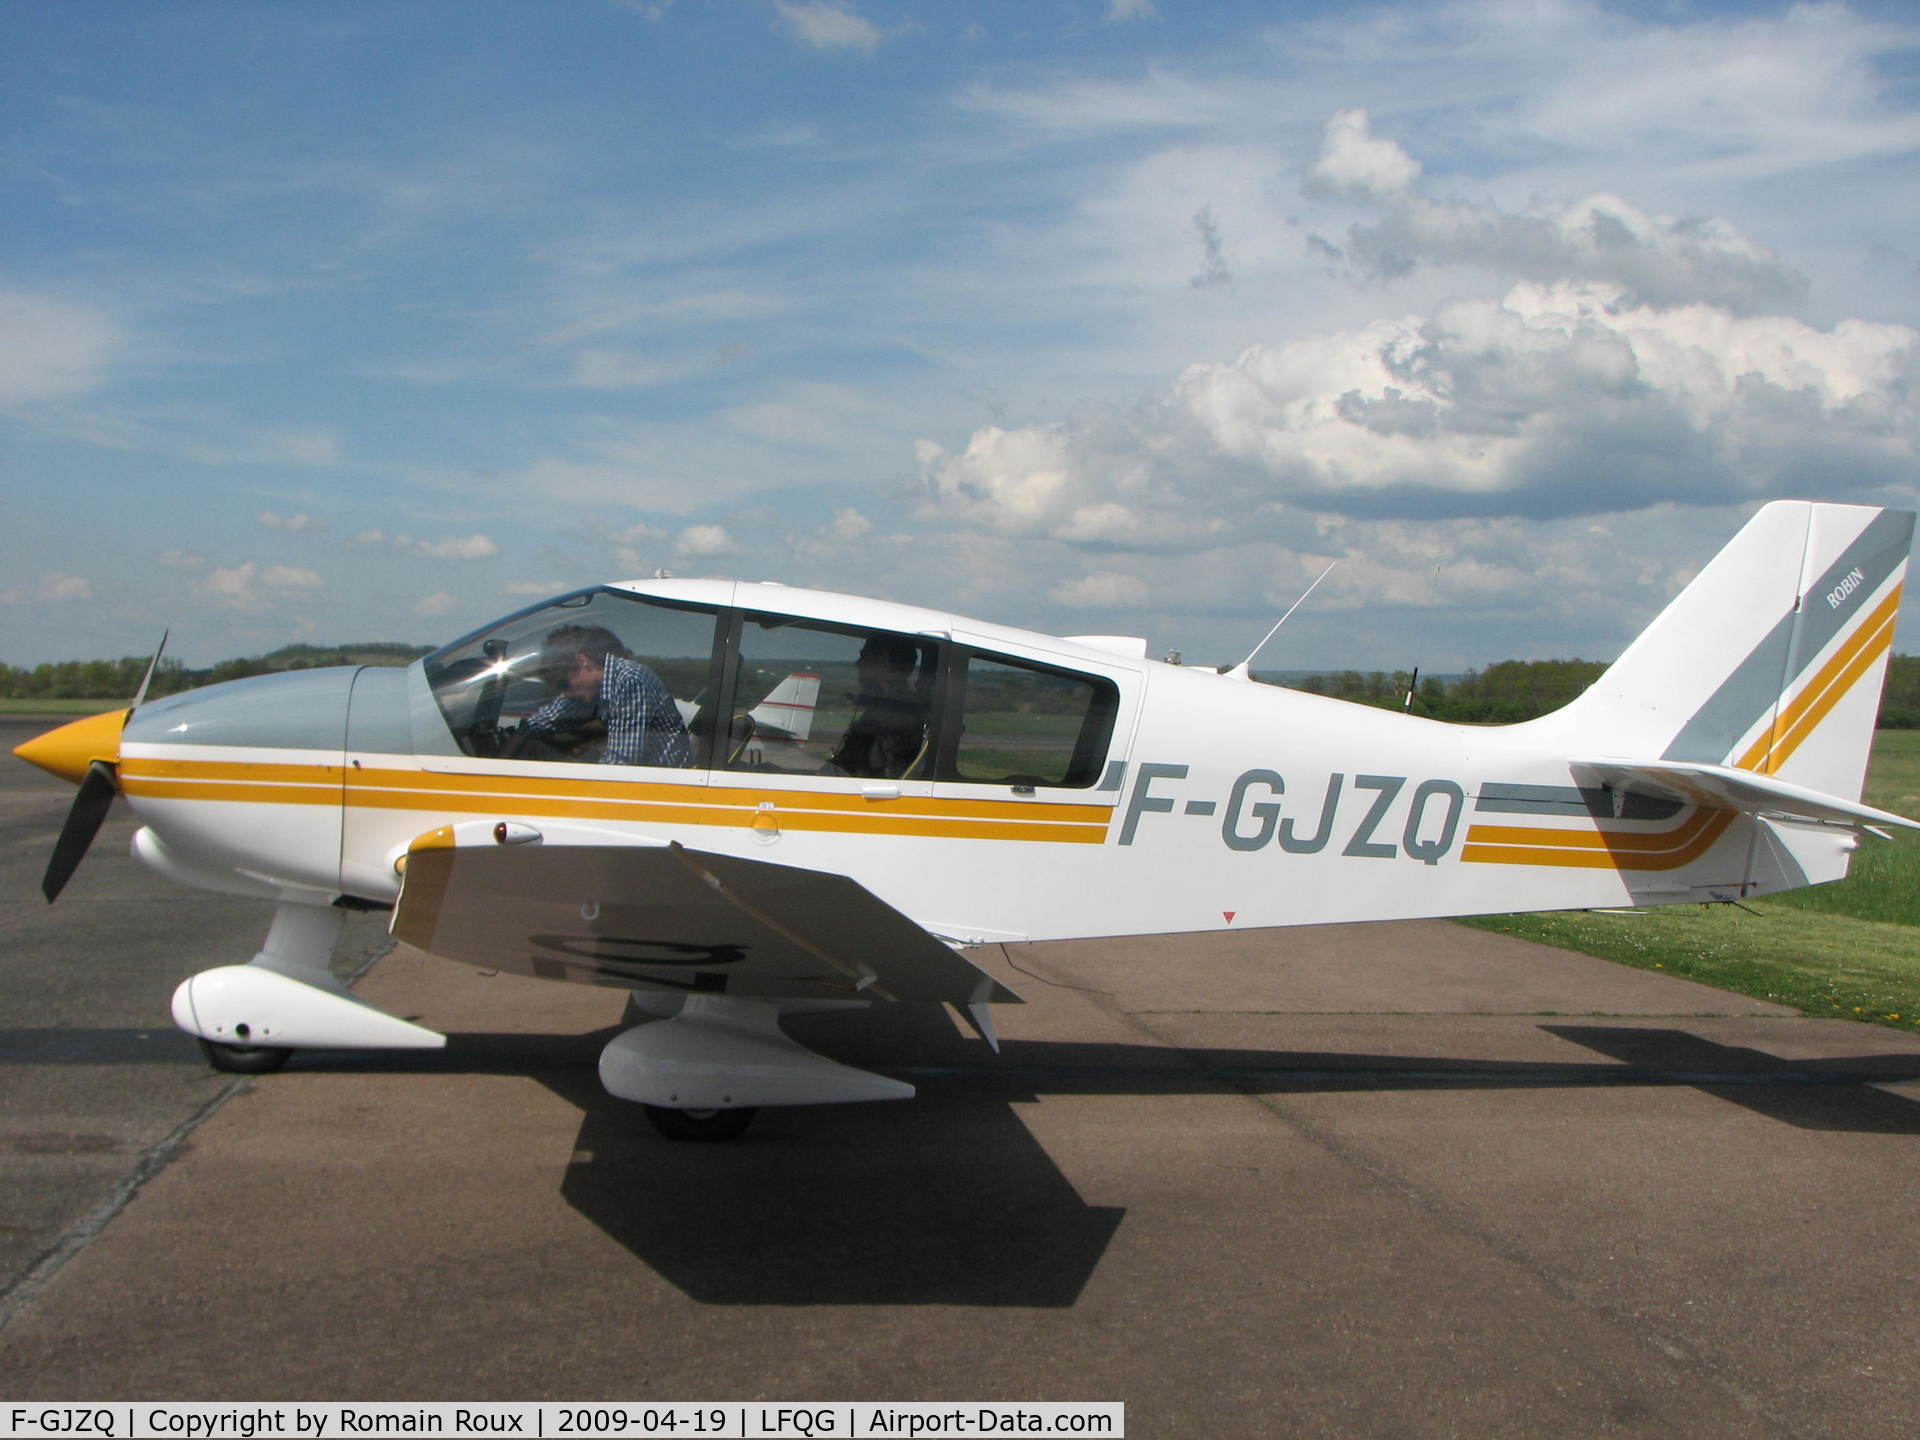 F-GJZQ, 1991 Robin DR-400-160 Chevalier C/N 2030, Parked